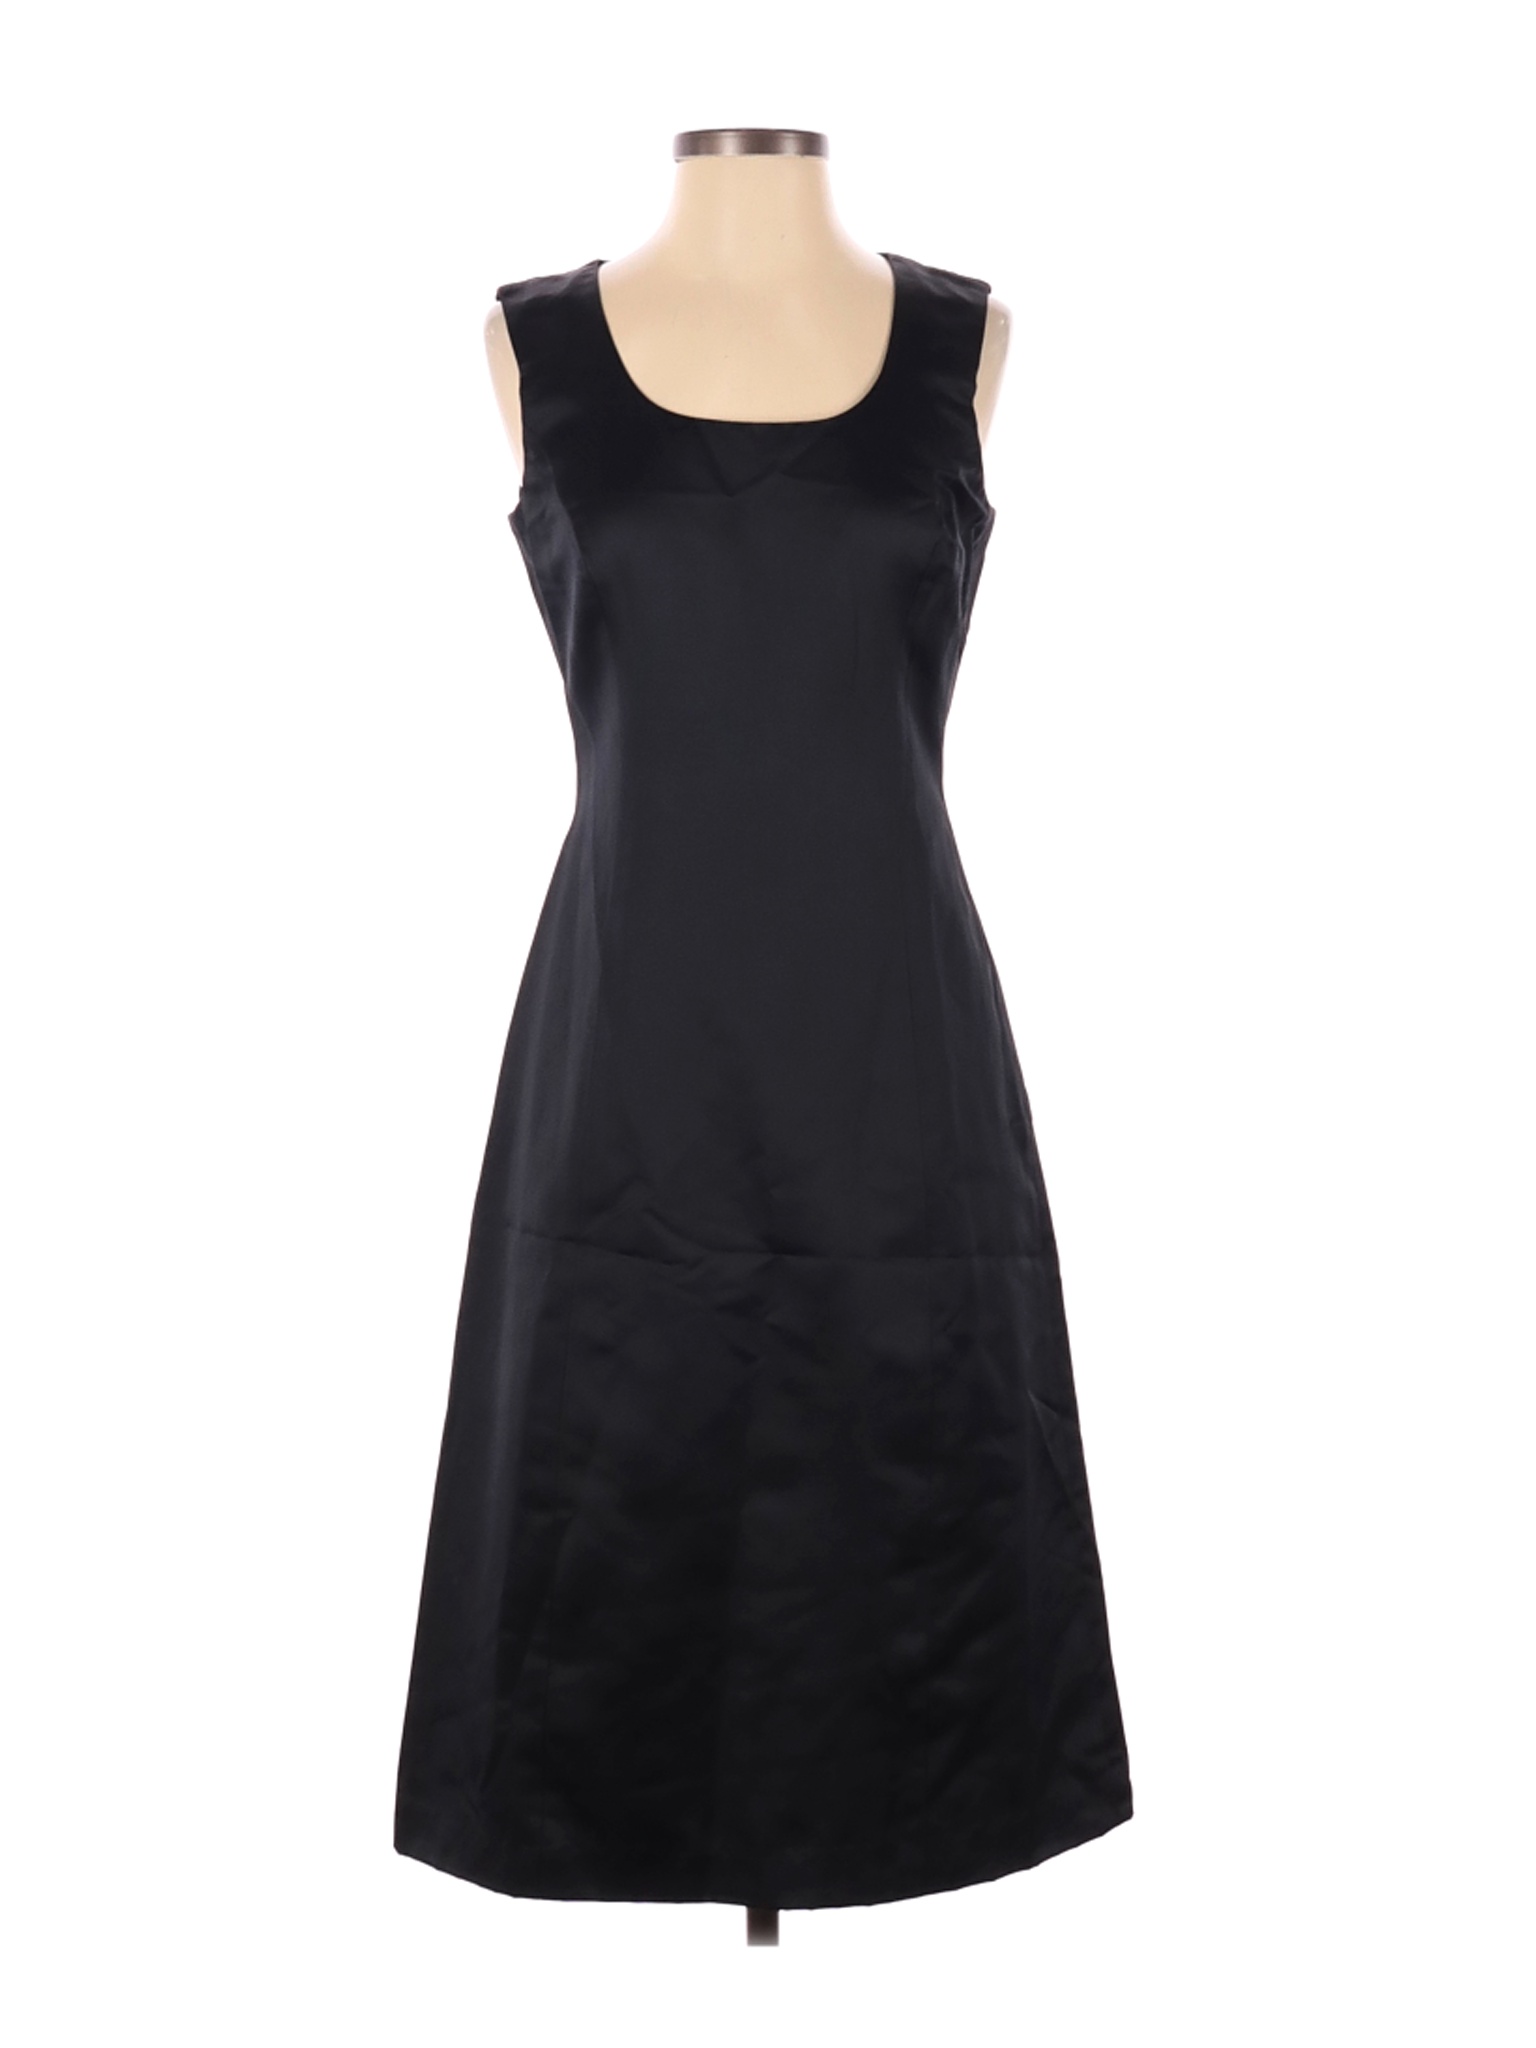 NWT Brooks Brothers Women Black Cocktail Dress 4 | eBay